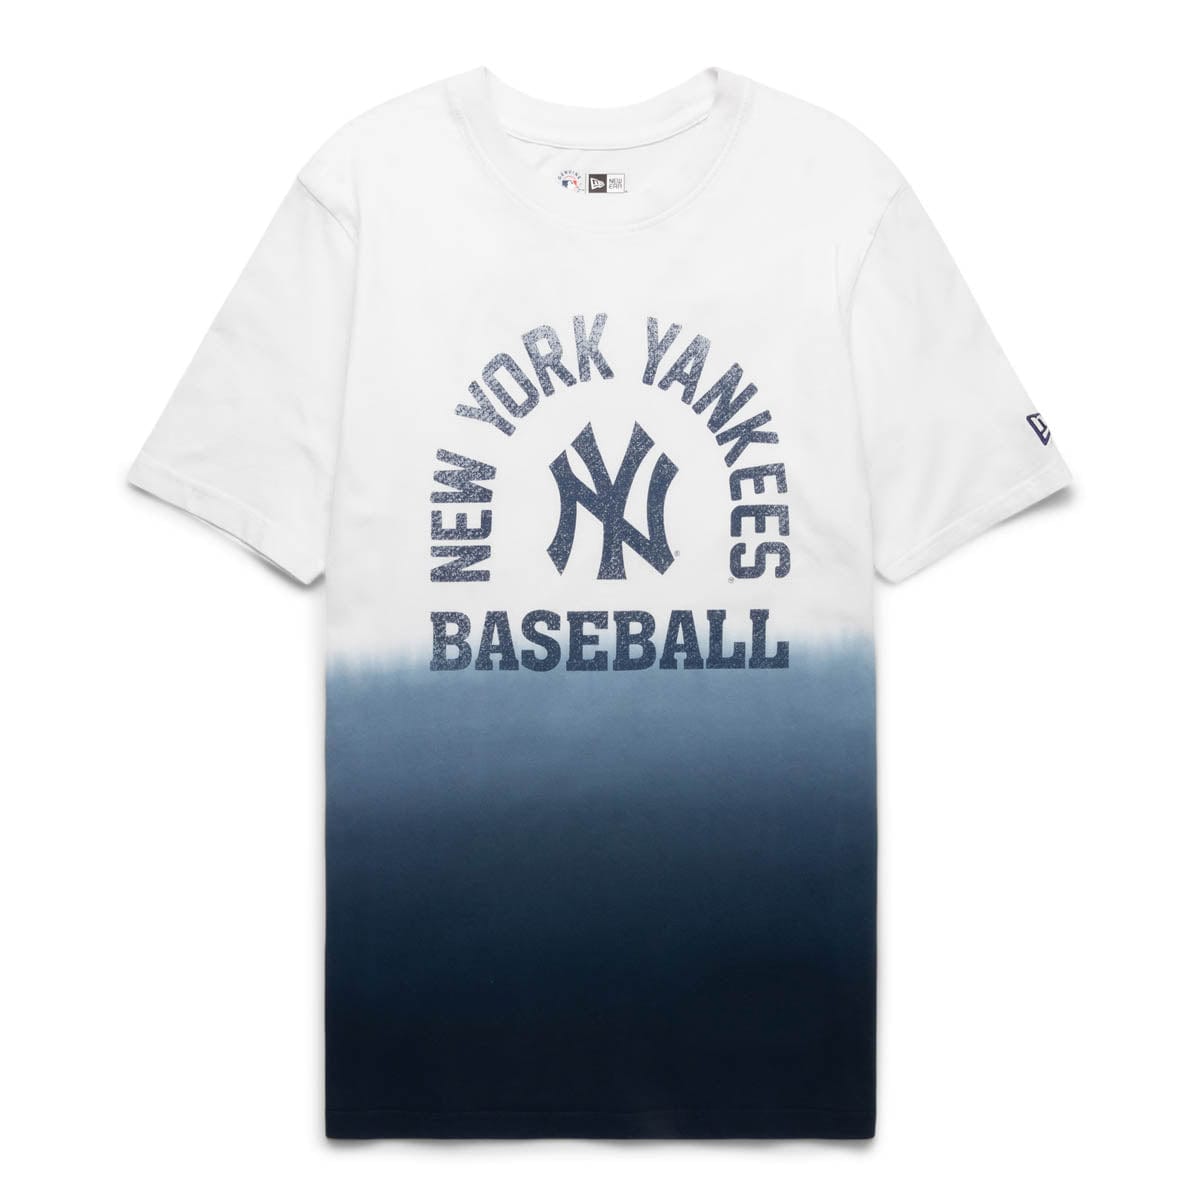 Women's New Era Navy New York Yankees Tie-Dye Cropped Long Sleeve T-Shirt